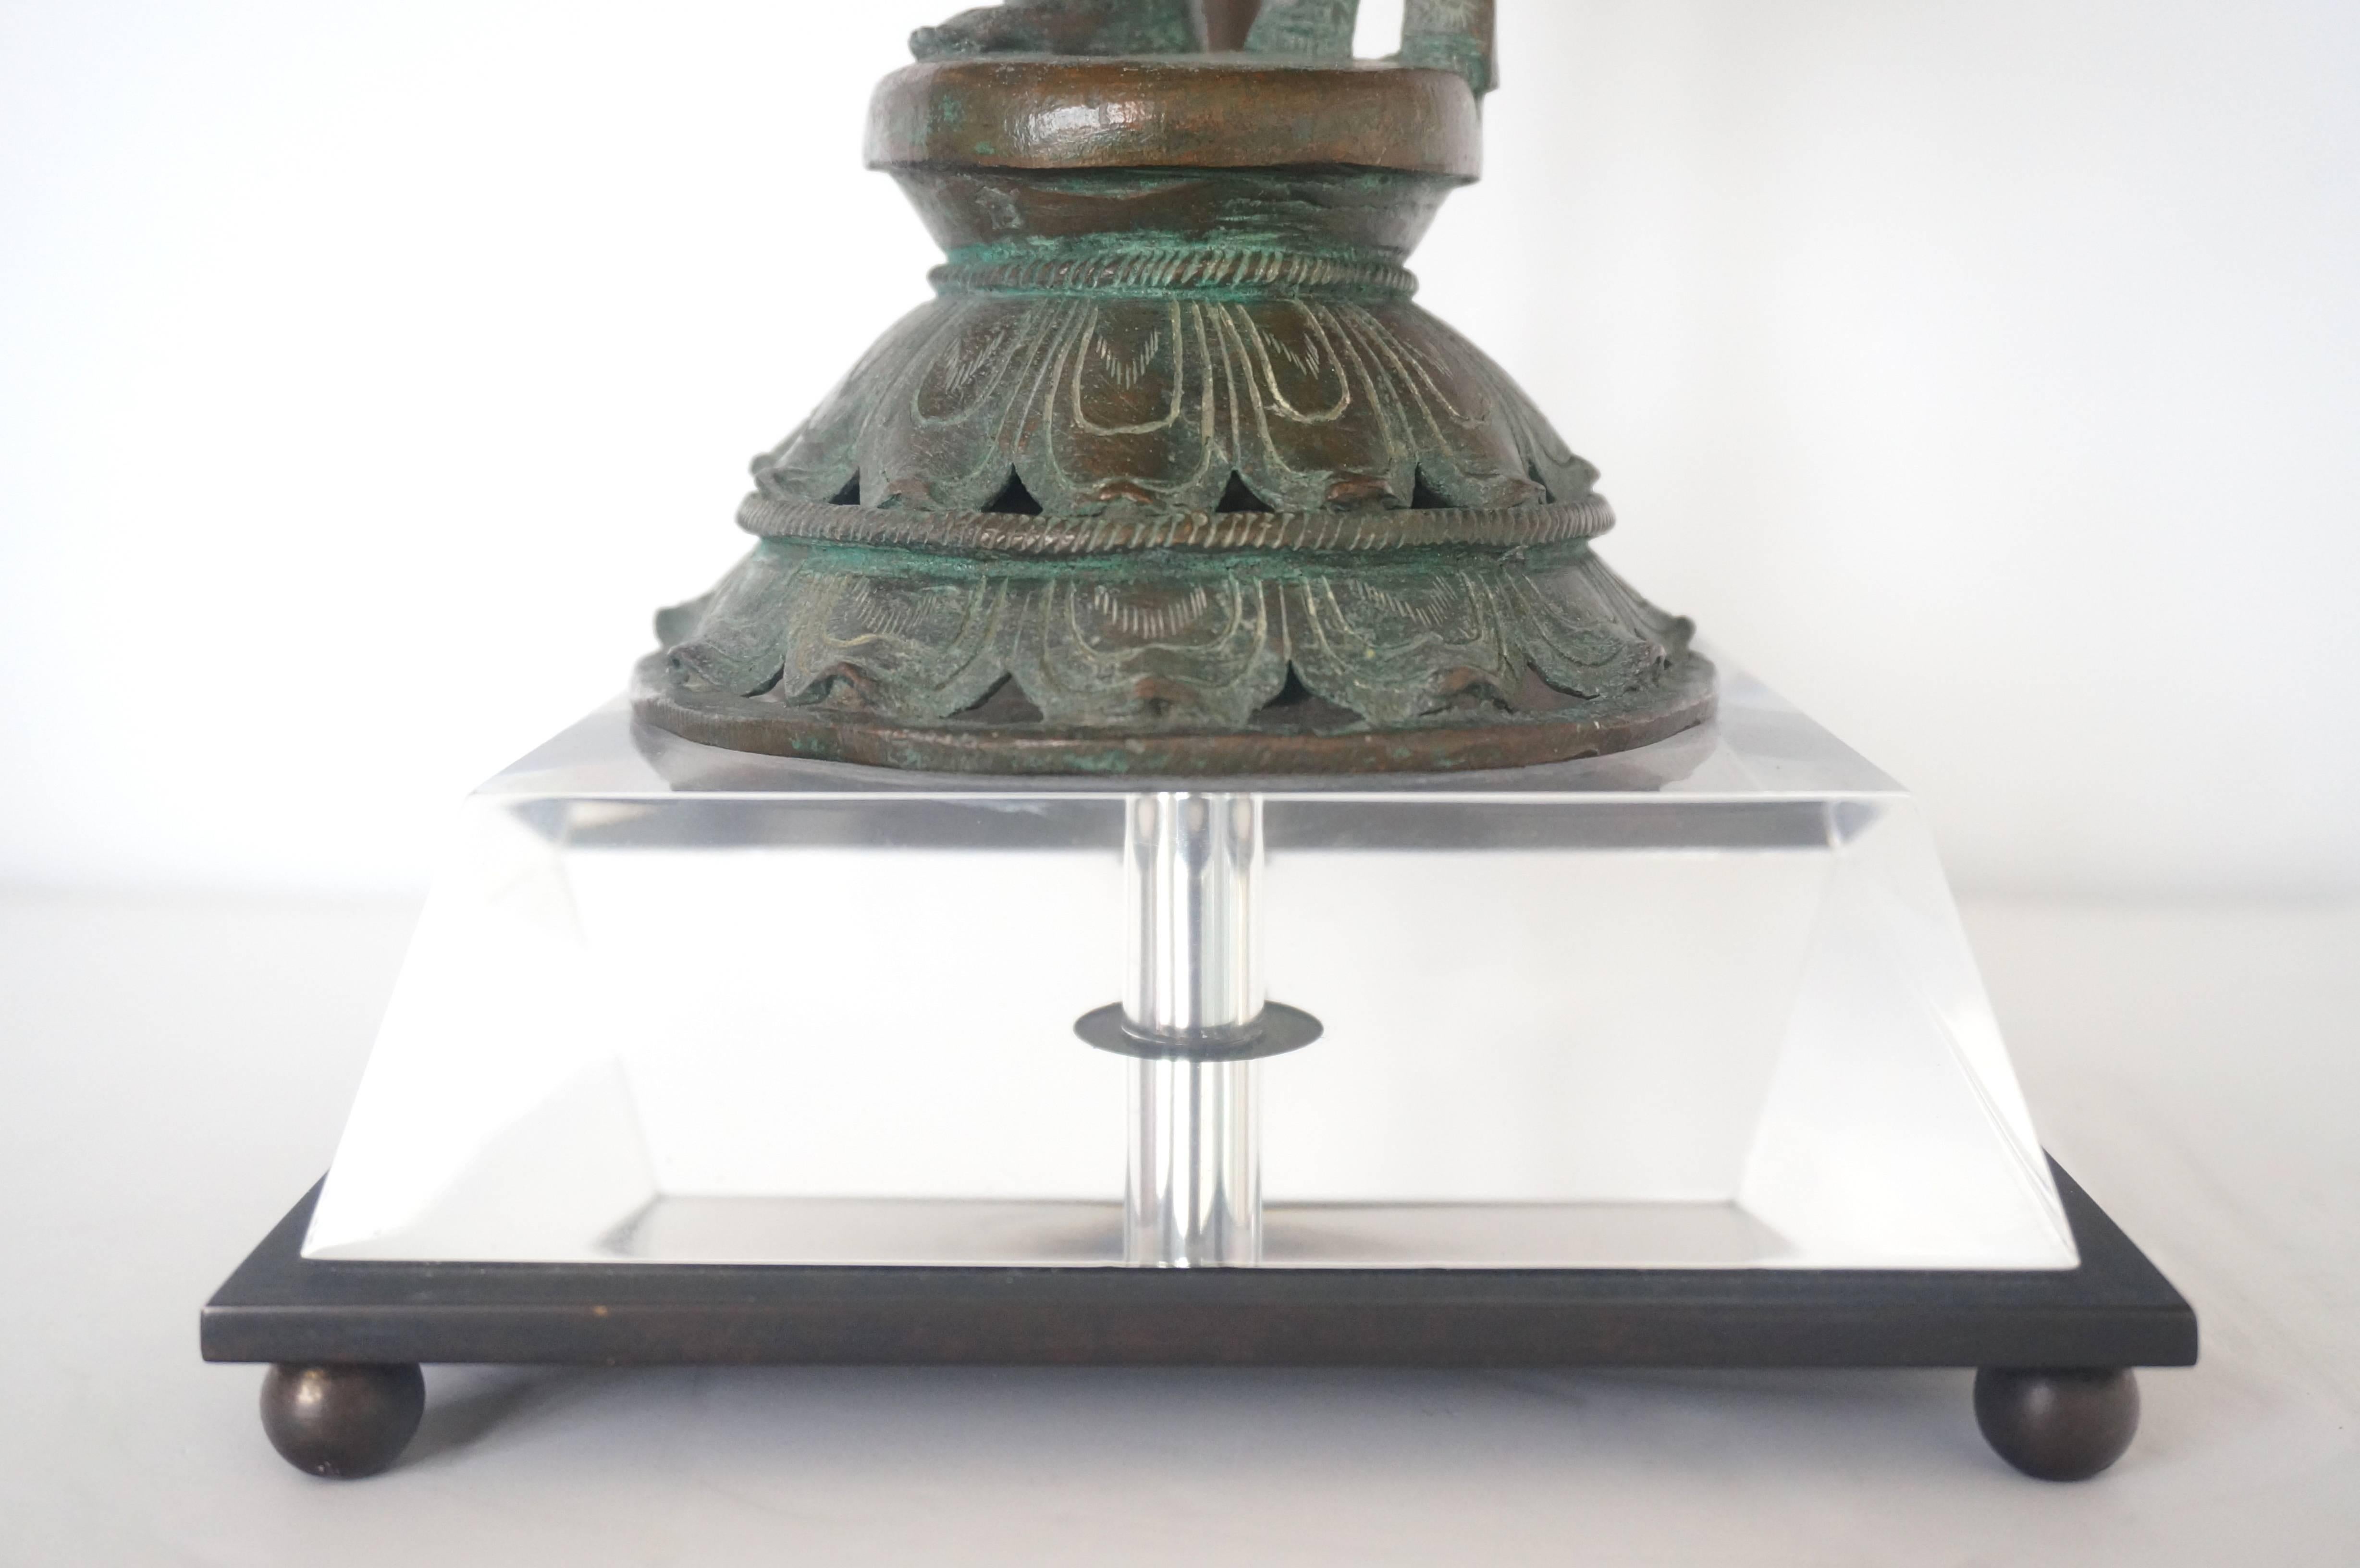 Indian Pair of Table Lamps, Bronze Sculptures of the Hindu Goddess Uma 'or Parvati'